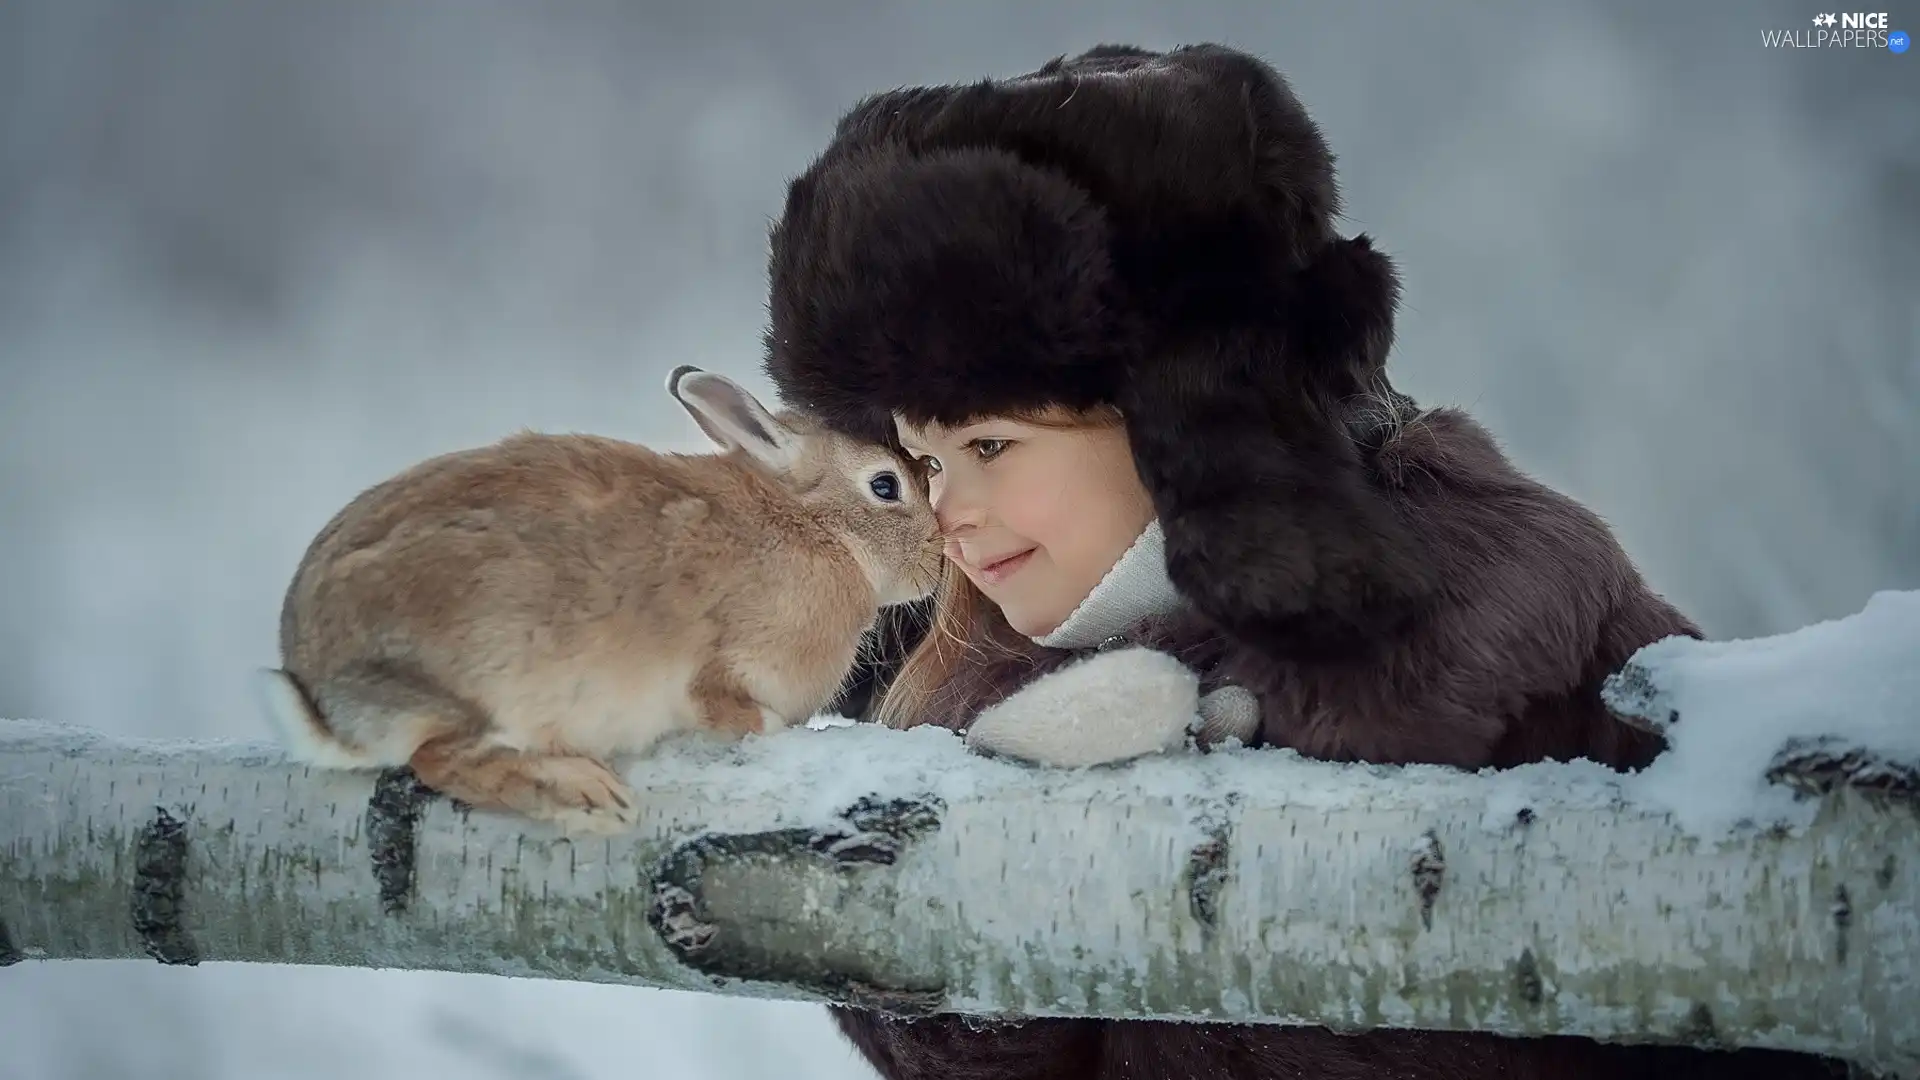 Rabbit, branch, Hat, Fur, girl